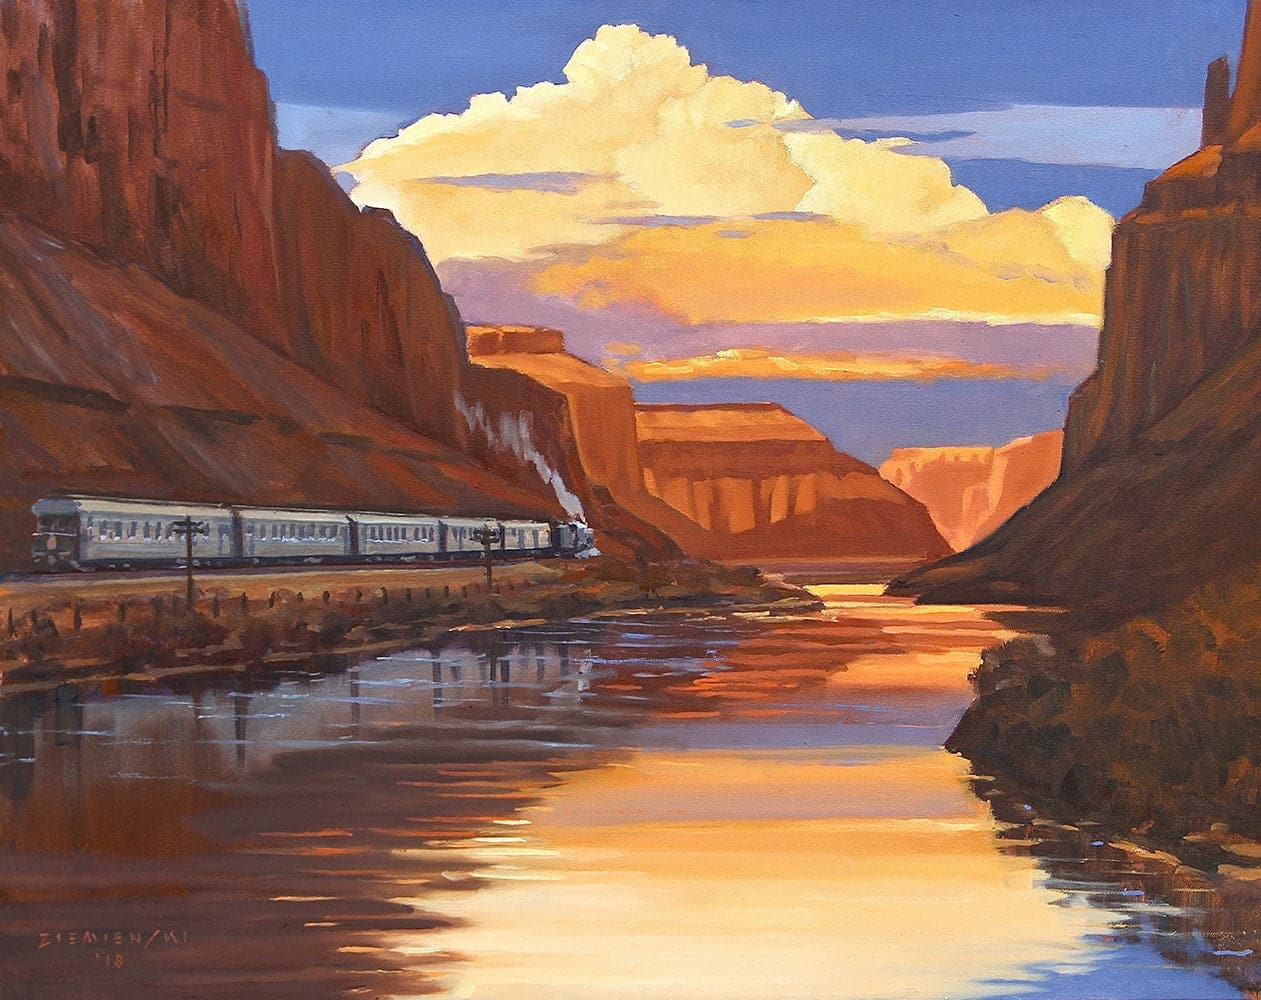 Dennis Ziemienski - River Canyon Reflections